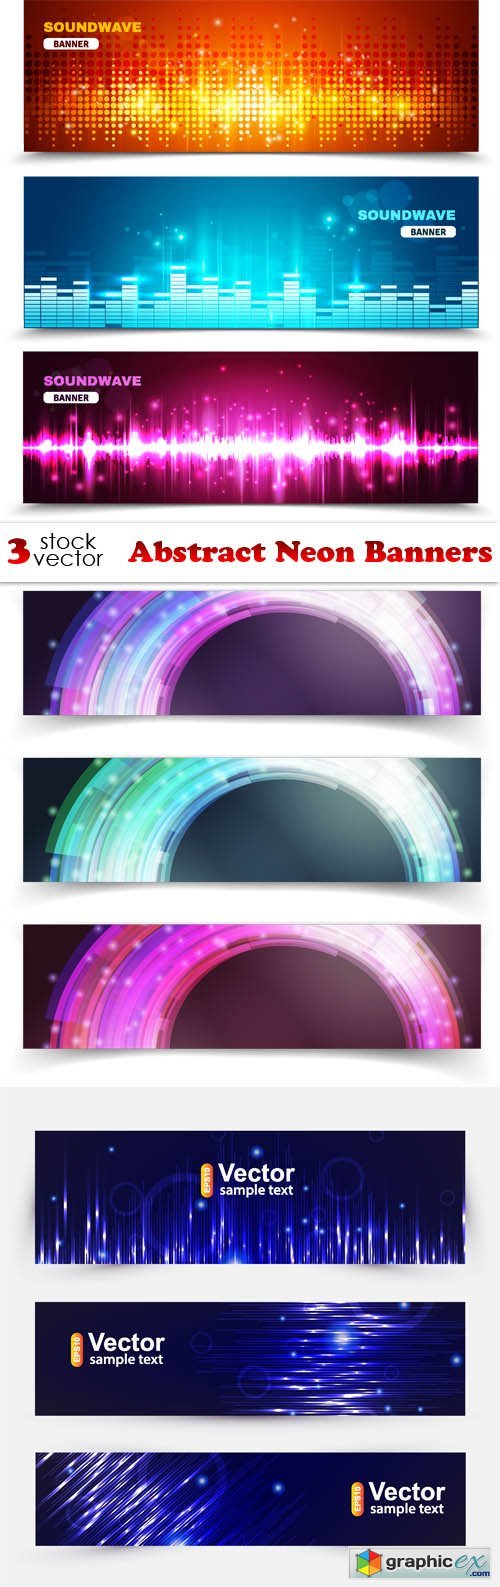 Vectors - Abstract Neon Banners